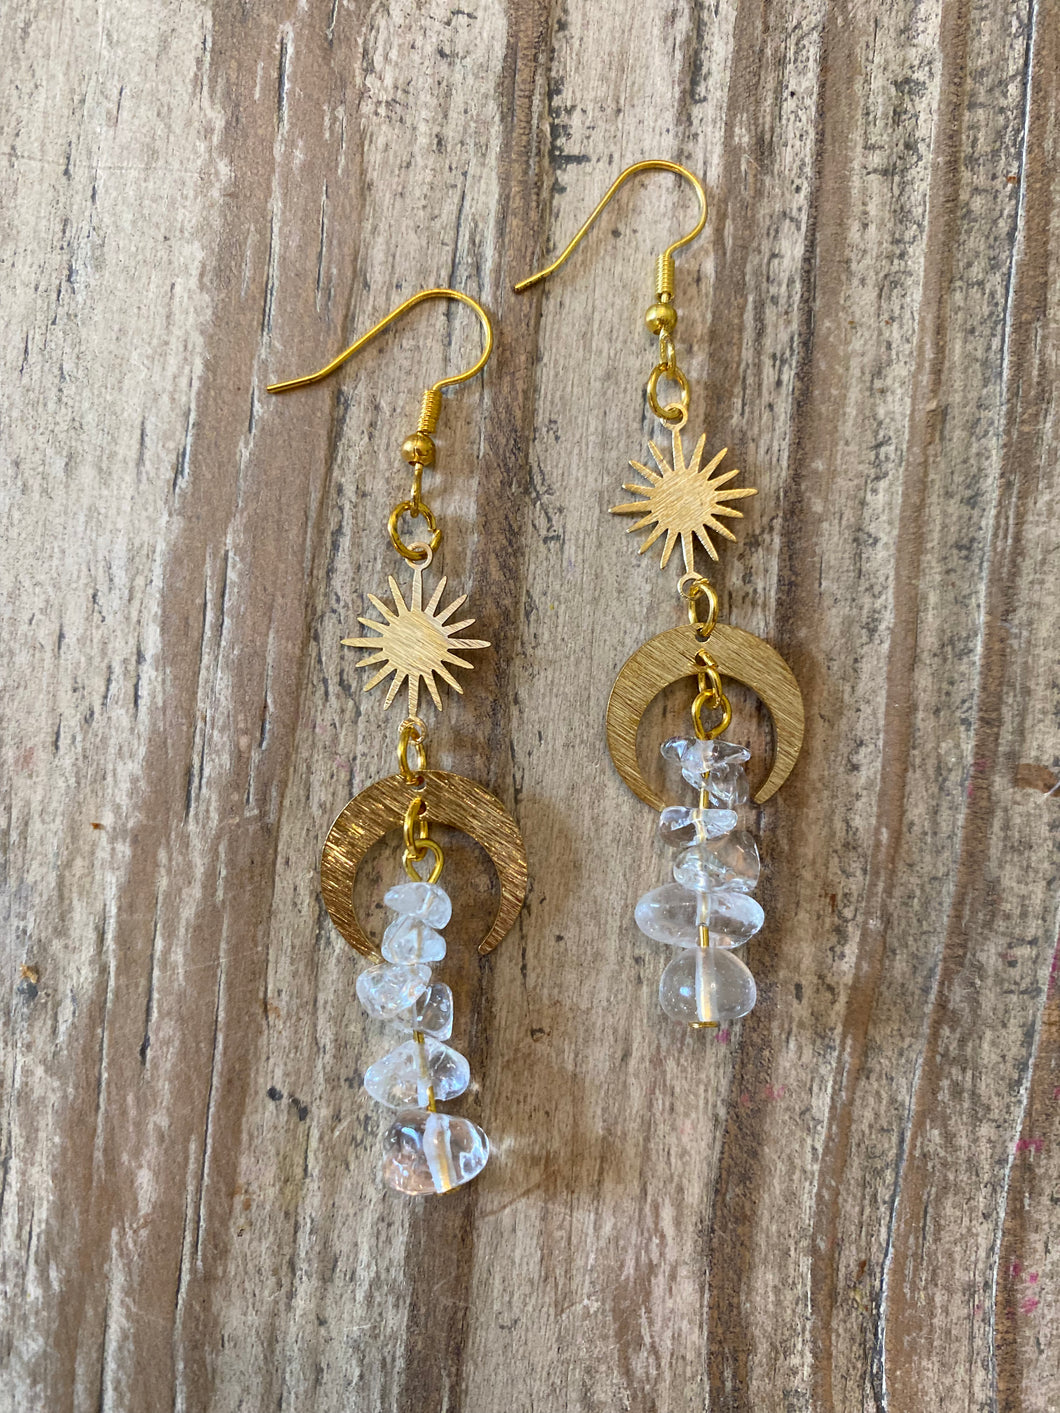 Moonshine quartz earrings